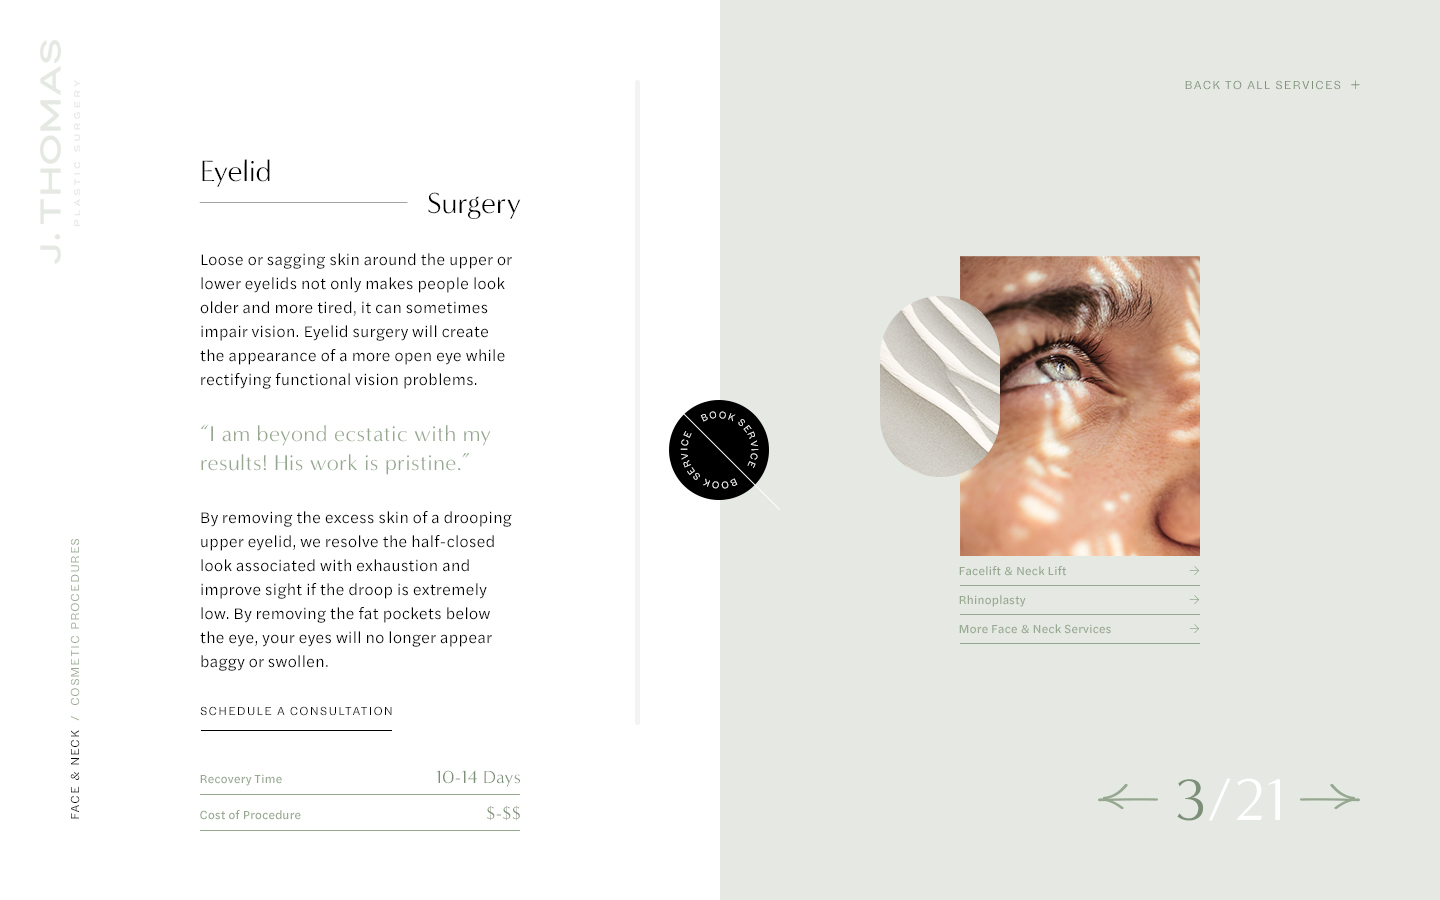 7-k-ritz-design-work-j-thomas-plastic-surgery-website-project-desktop-interior-1-right